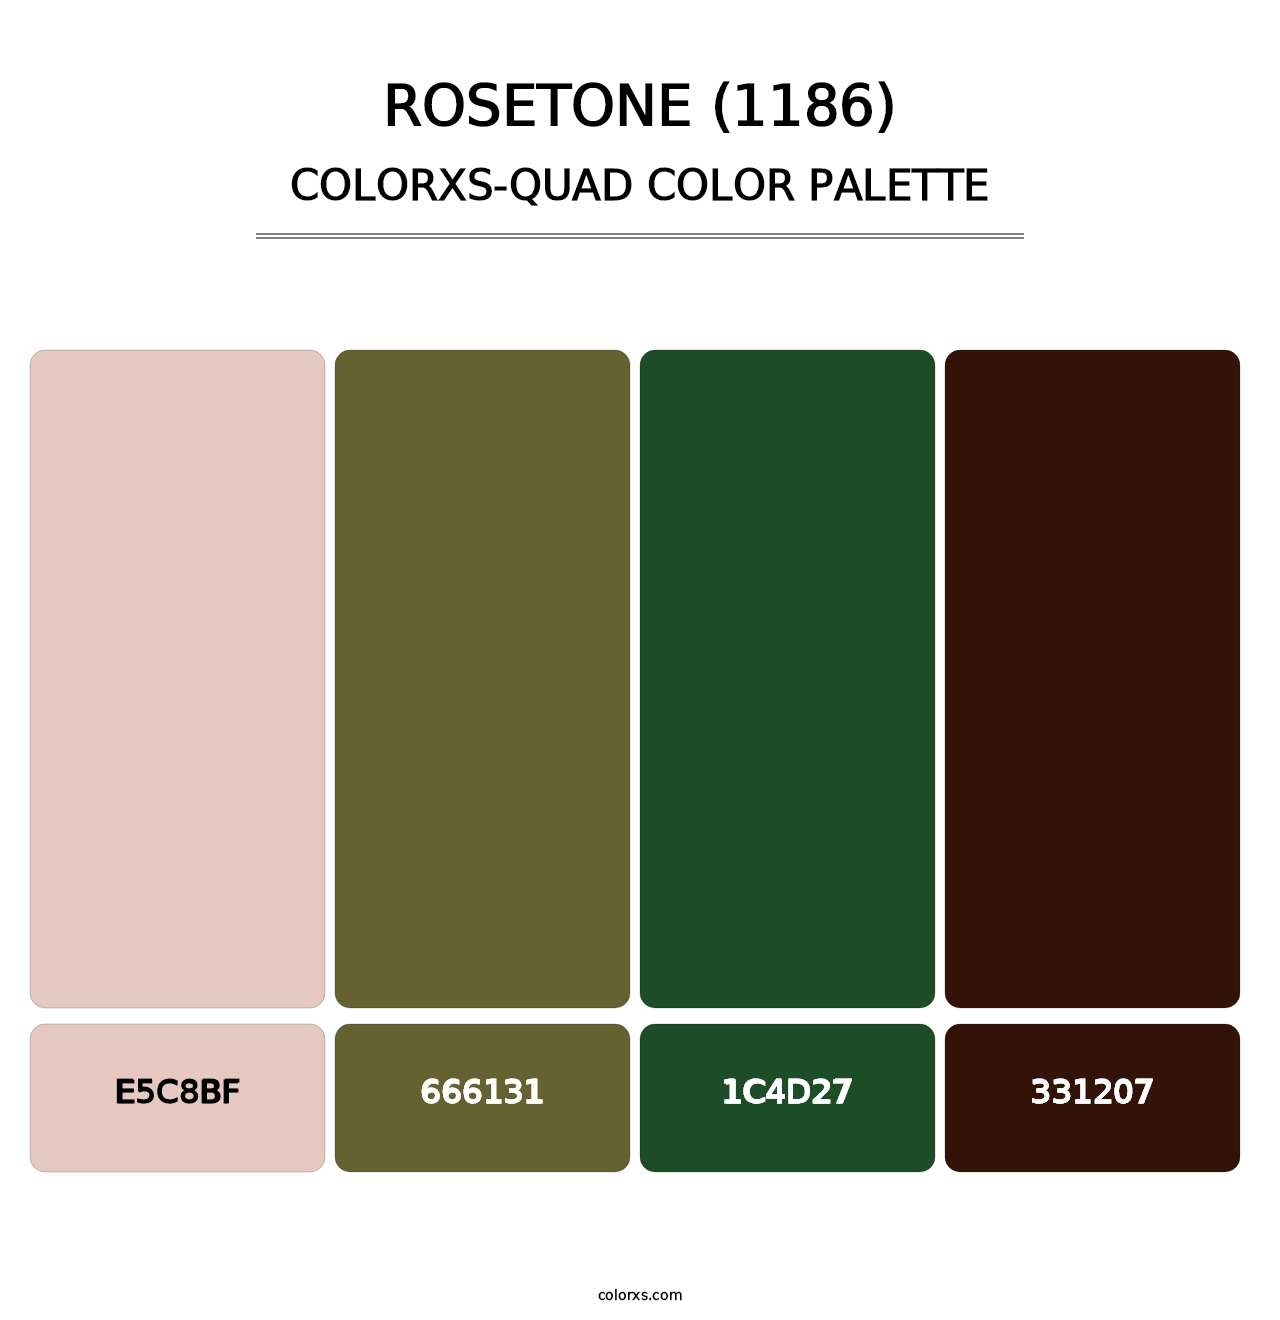 Rosetone (1186) - Colorxs Quad Palette